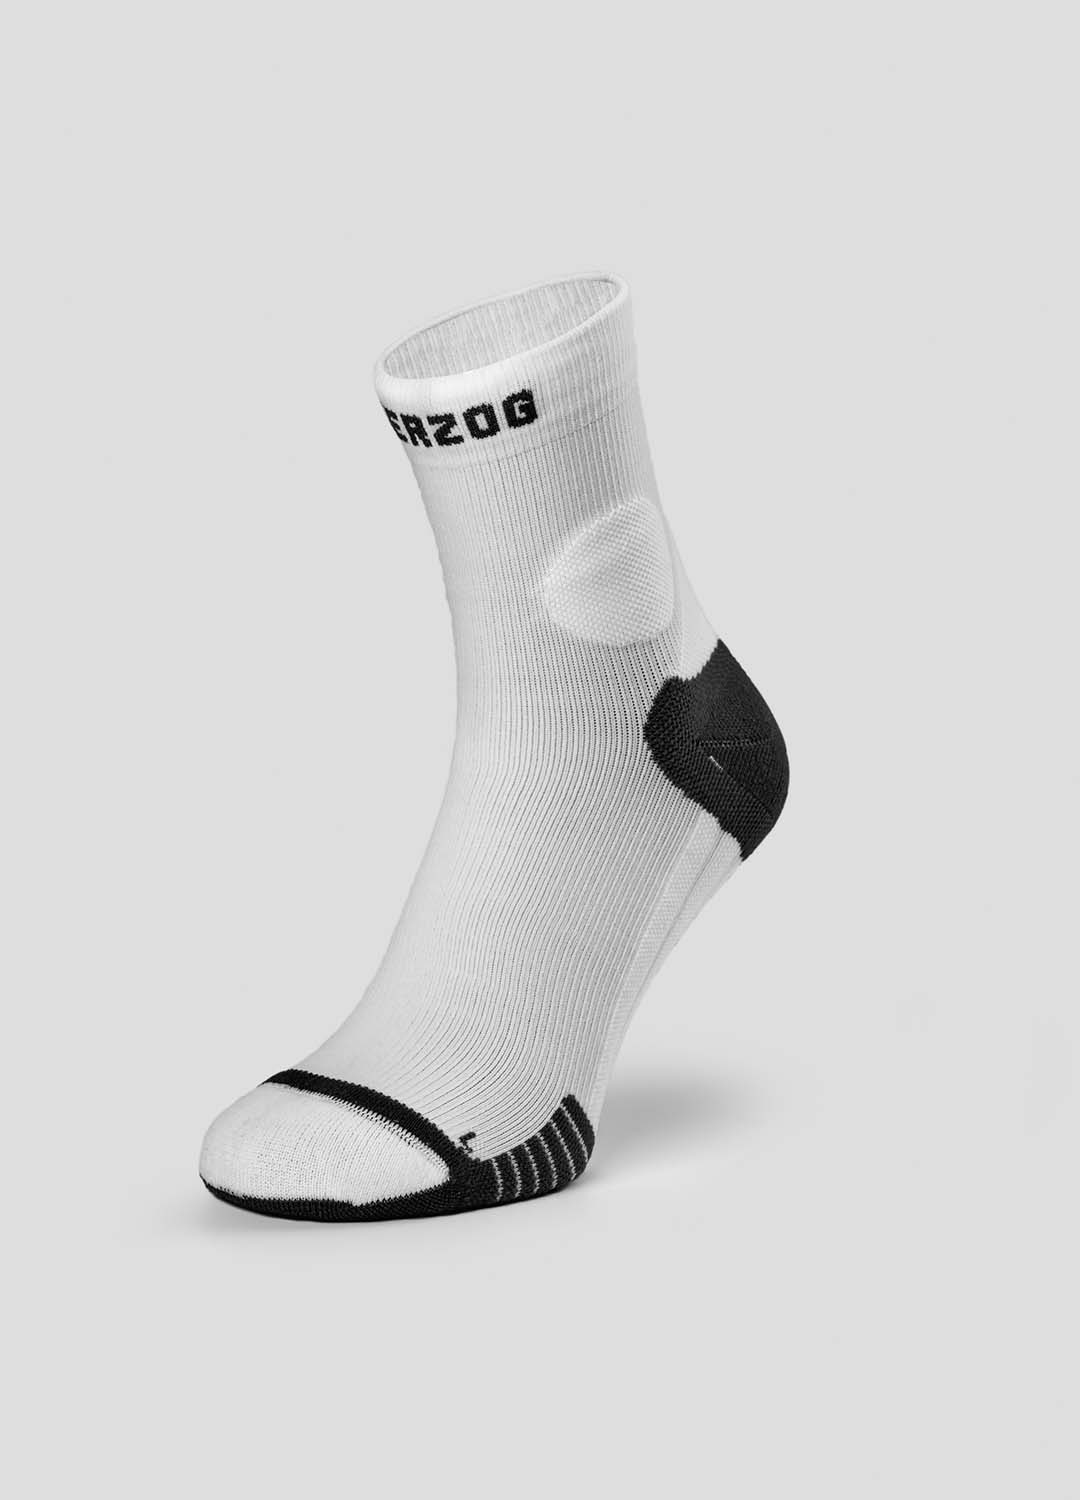 Shop your white Herzog PRO Compression Ankle Socks